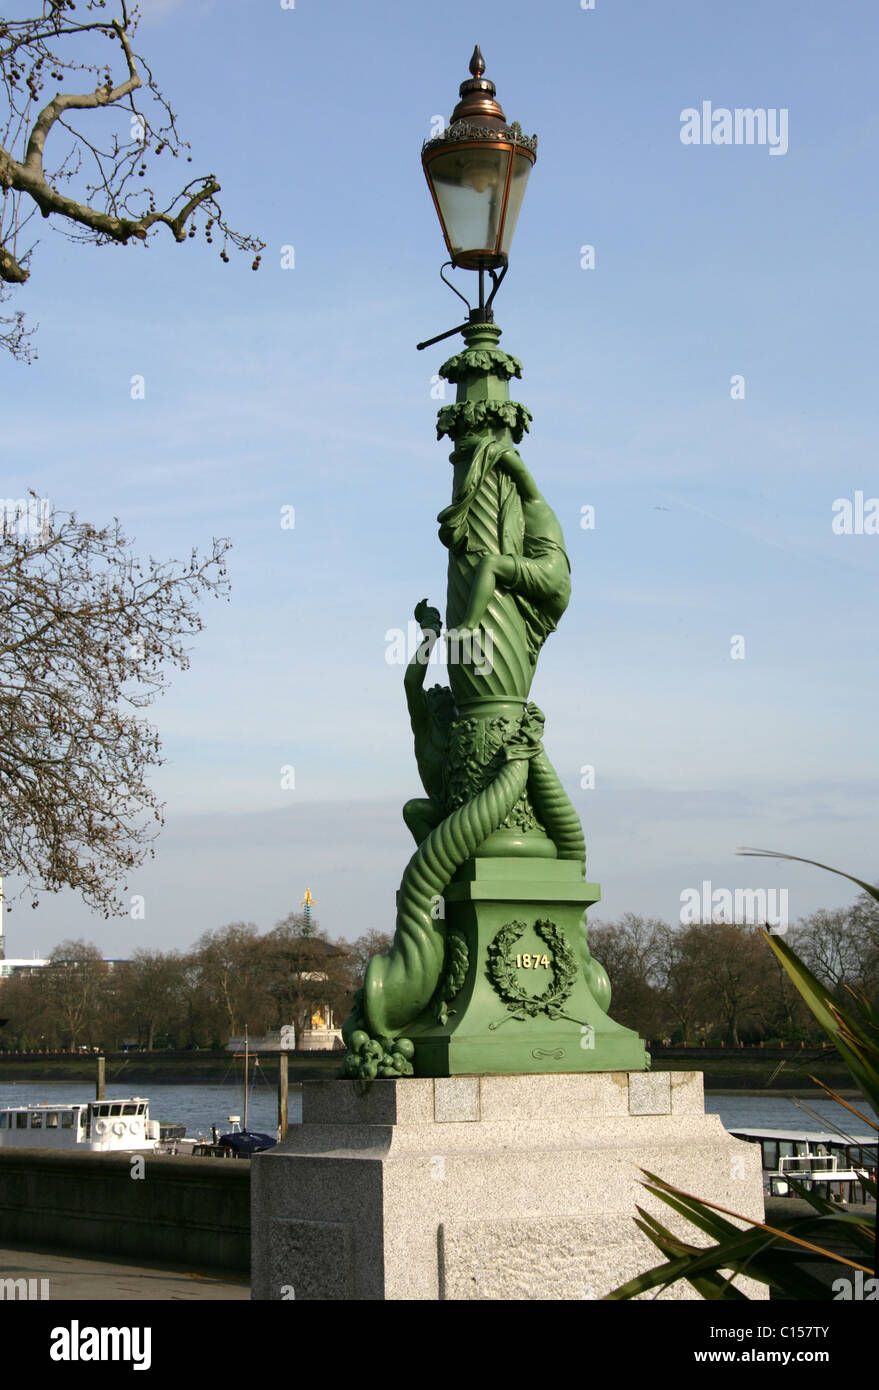 Viktorianischen Lampe Post Skulptur, Chelsea Embankment, Themse, London, UK. Errichtet neben Albert Bridge anlässlich die Eröffnung. Stockfoto